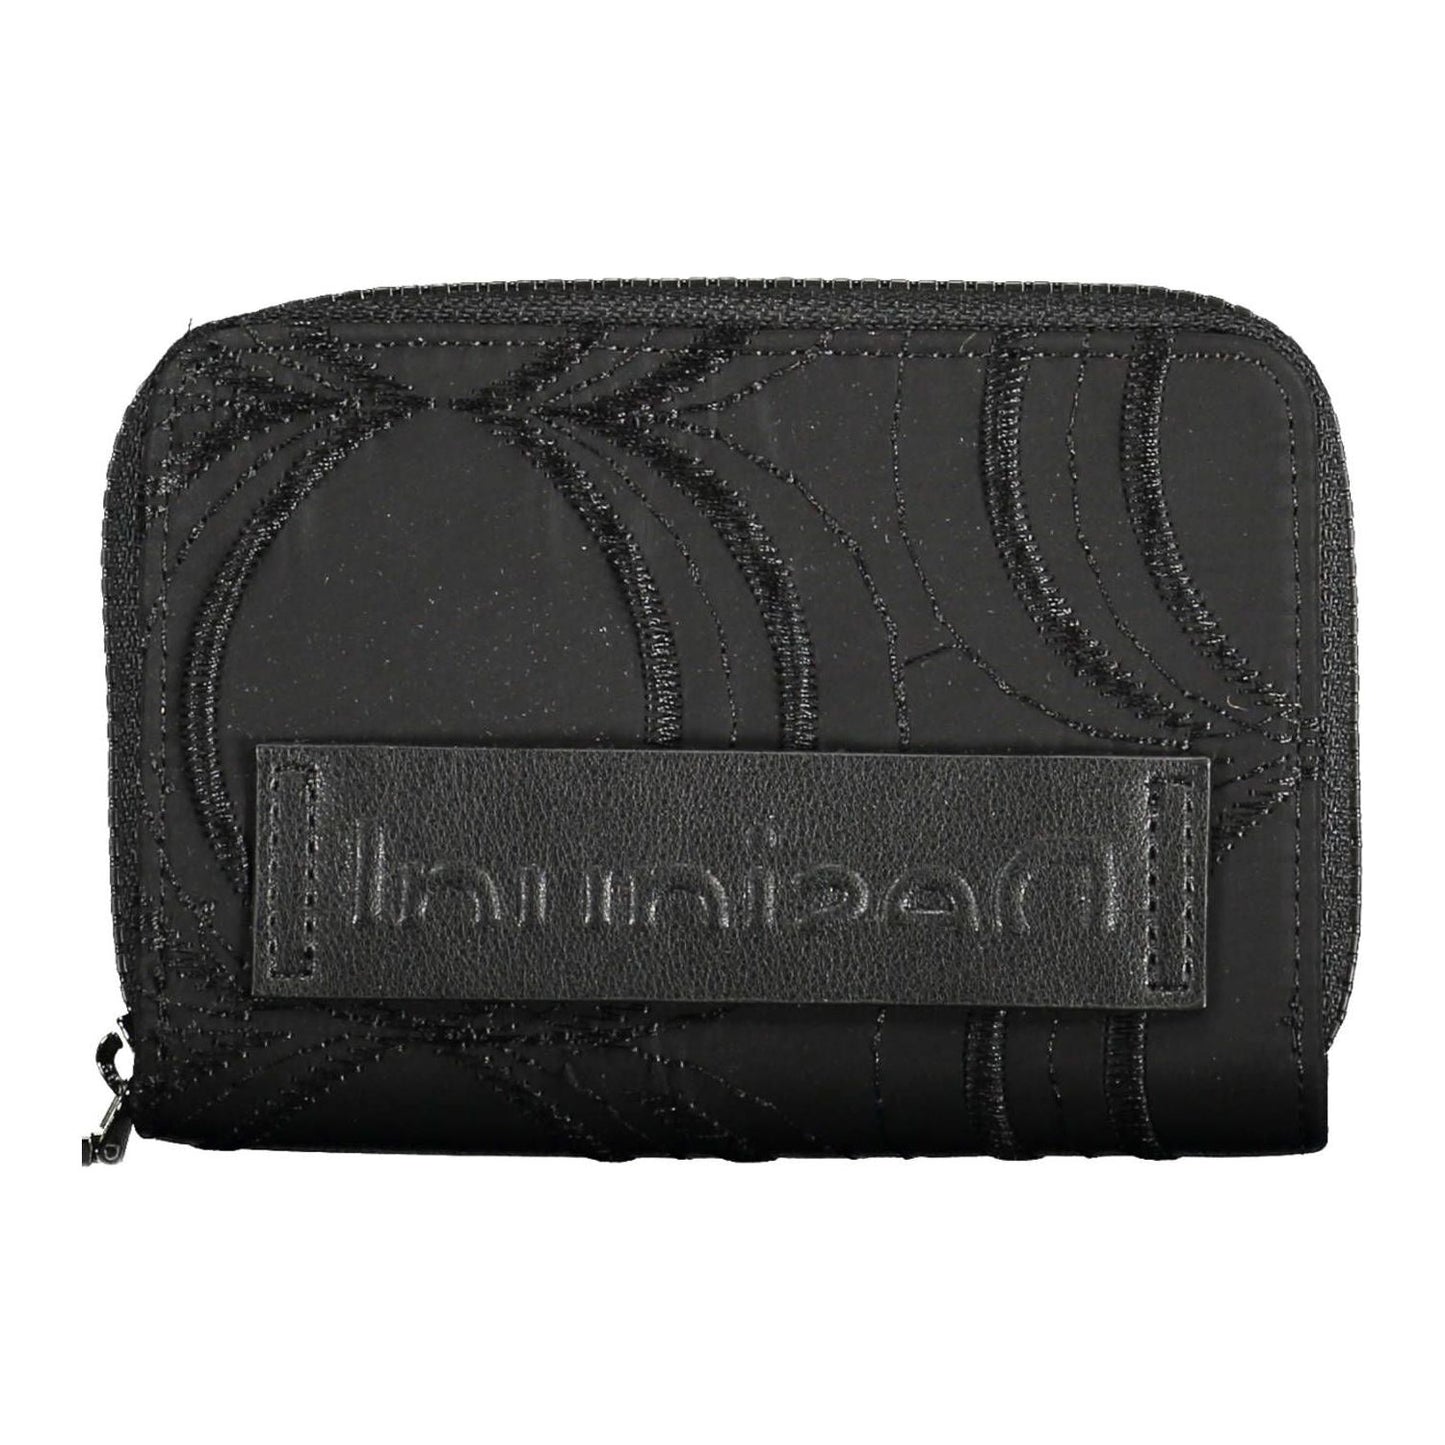 Desigual Chic Multifunctional Black Zip Wallet chic-multifunctional-black-zip-wallet